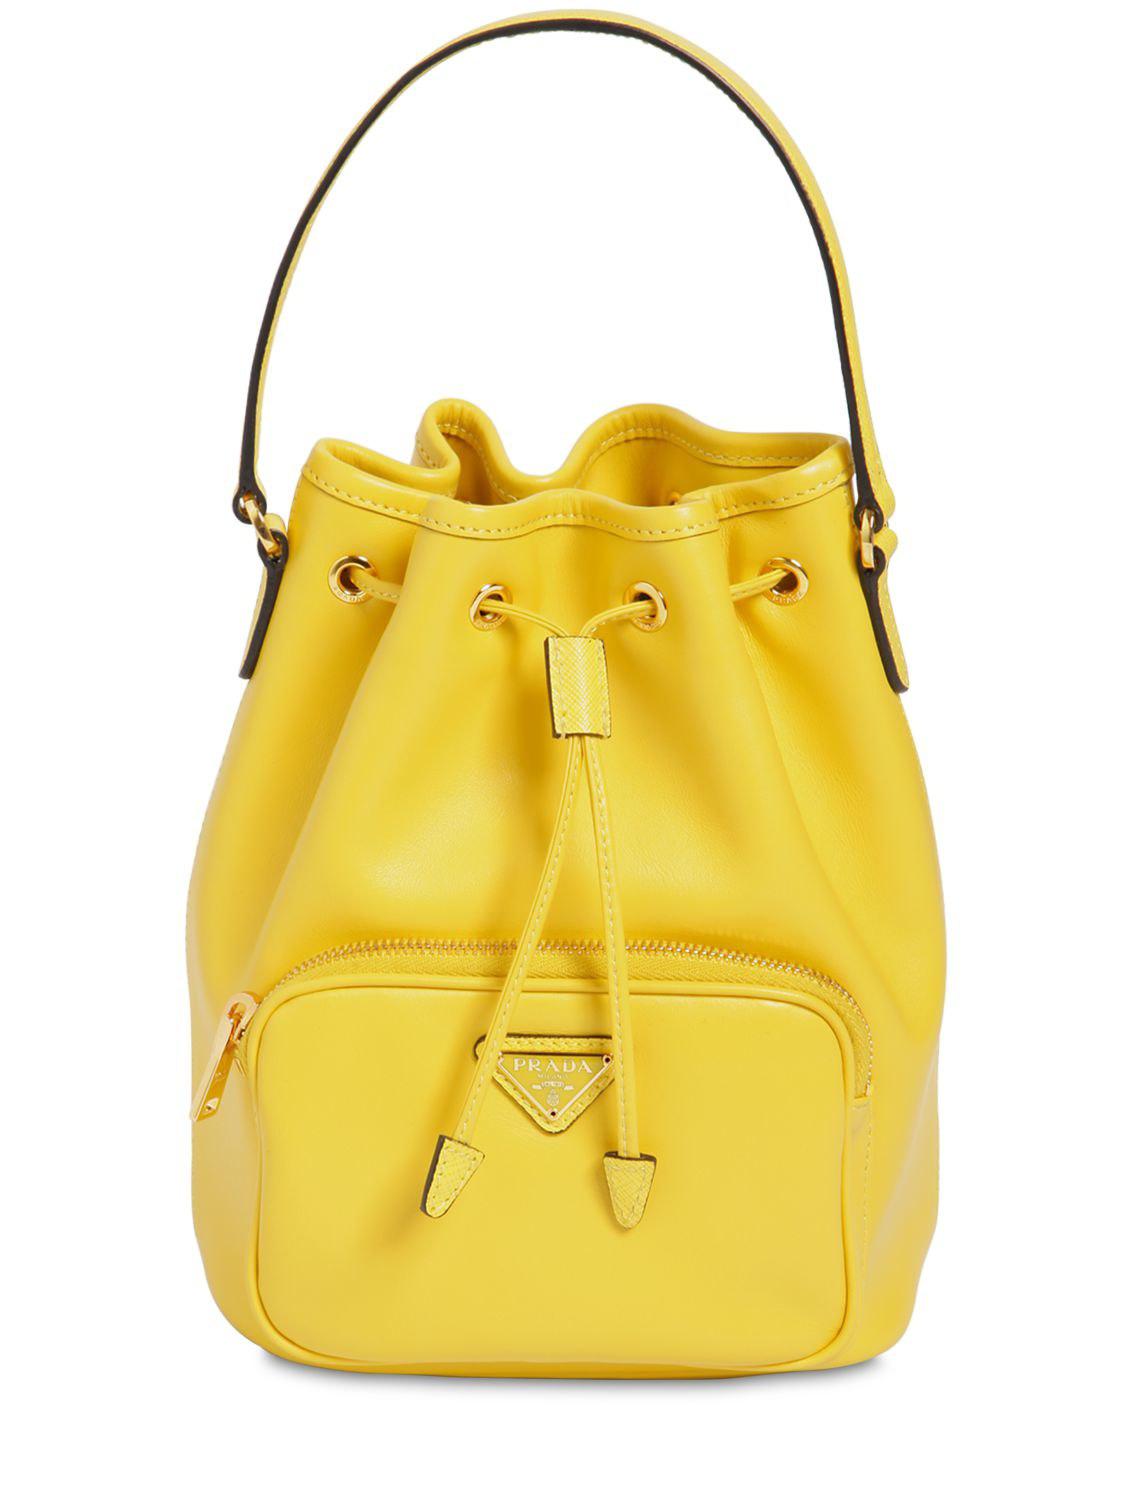 Prada Saffiano & City Leather Bucket Bag in Yellow - Lyst